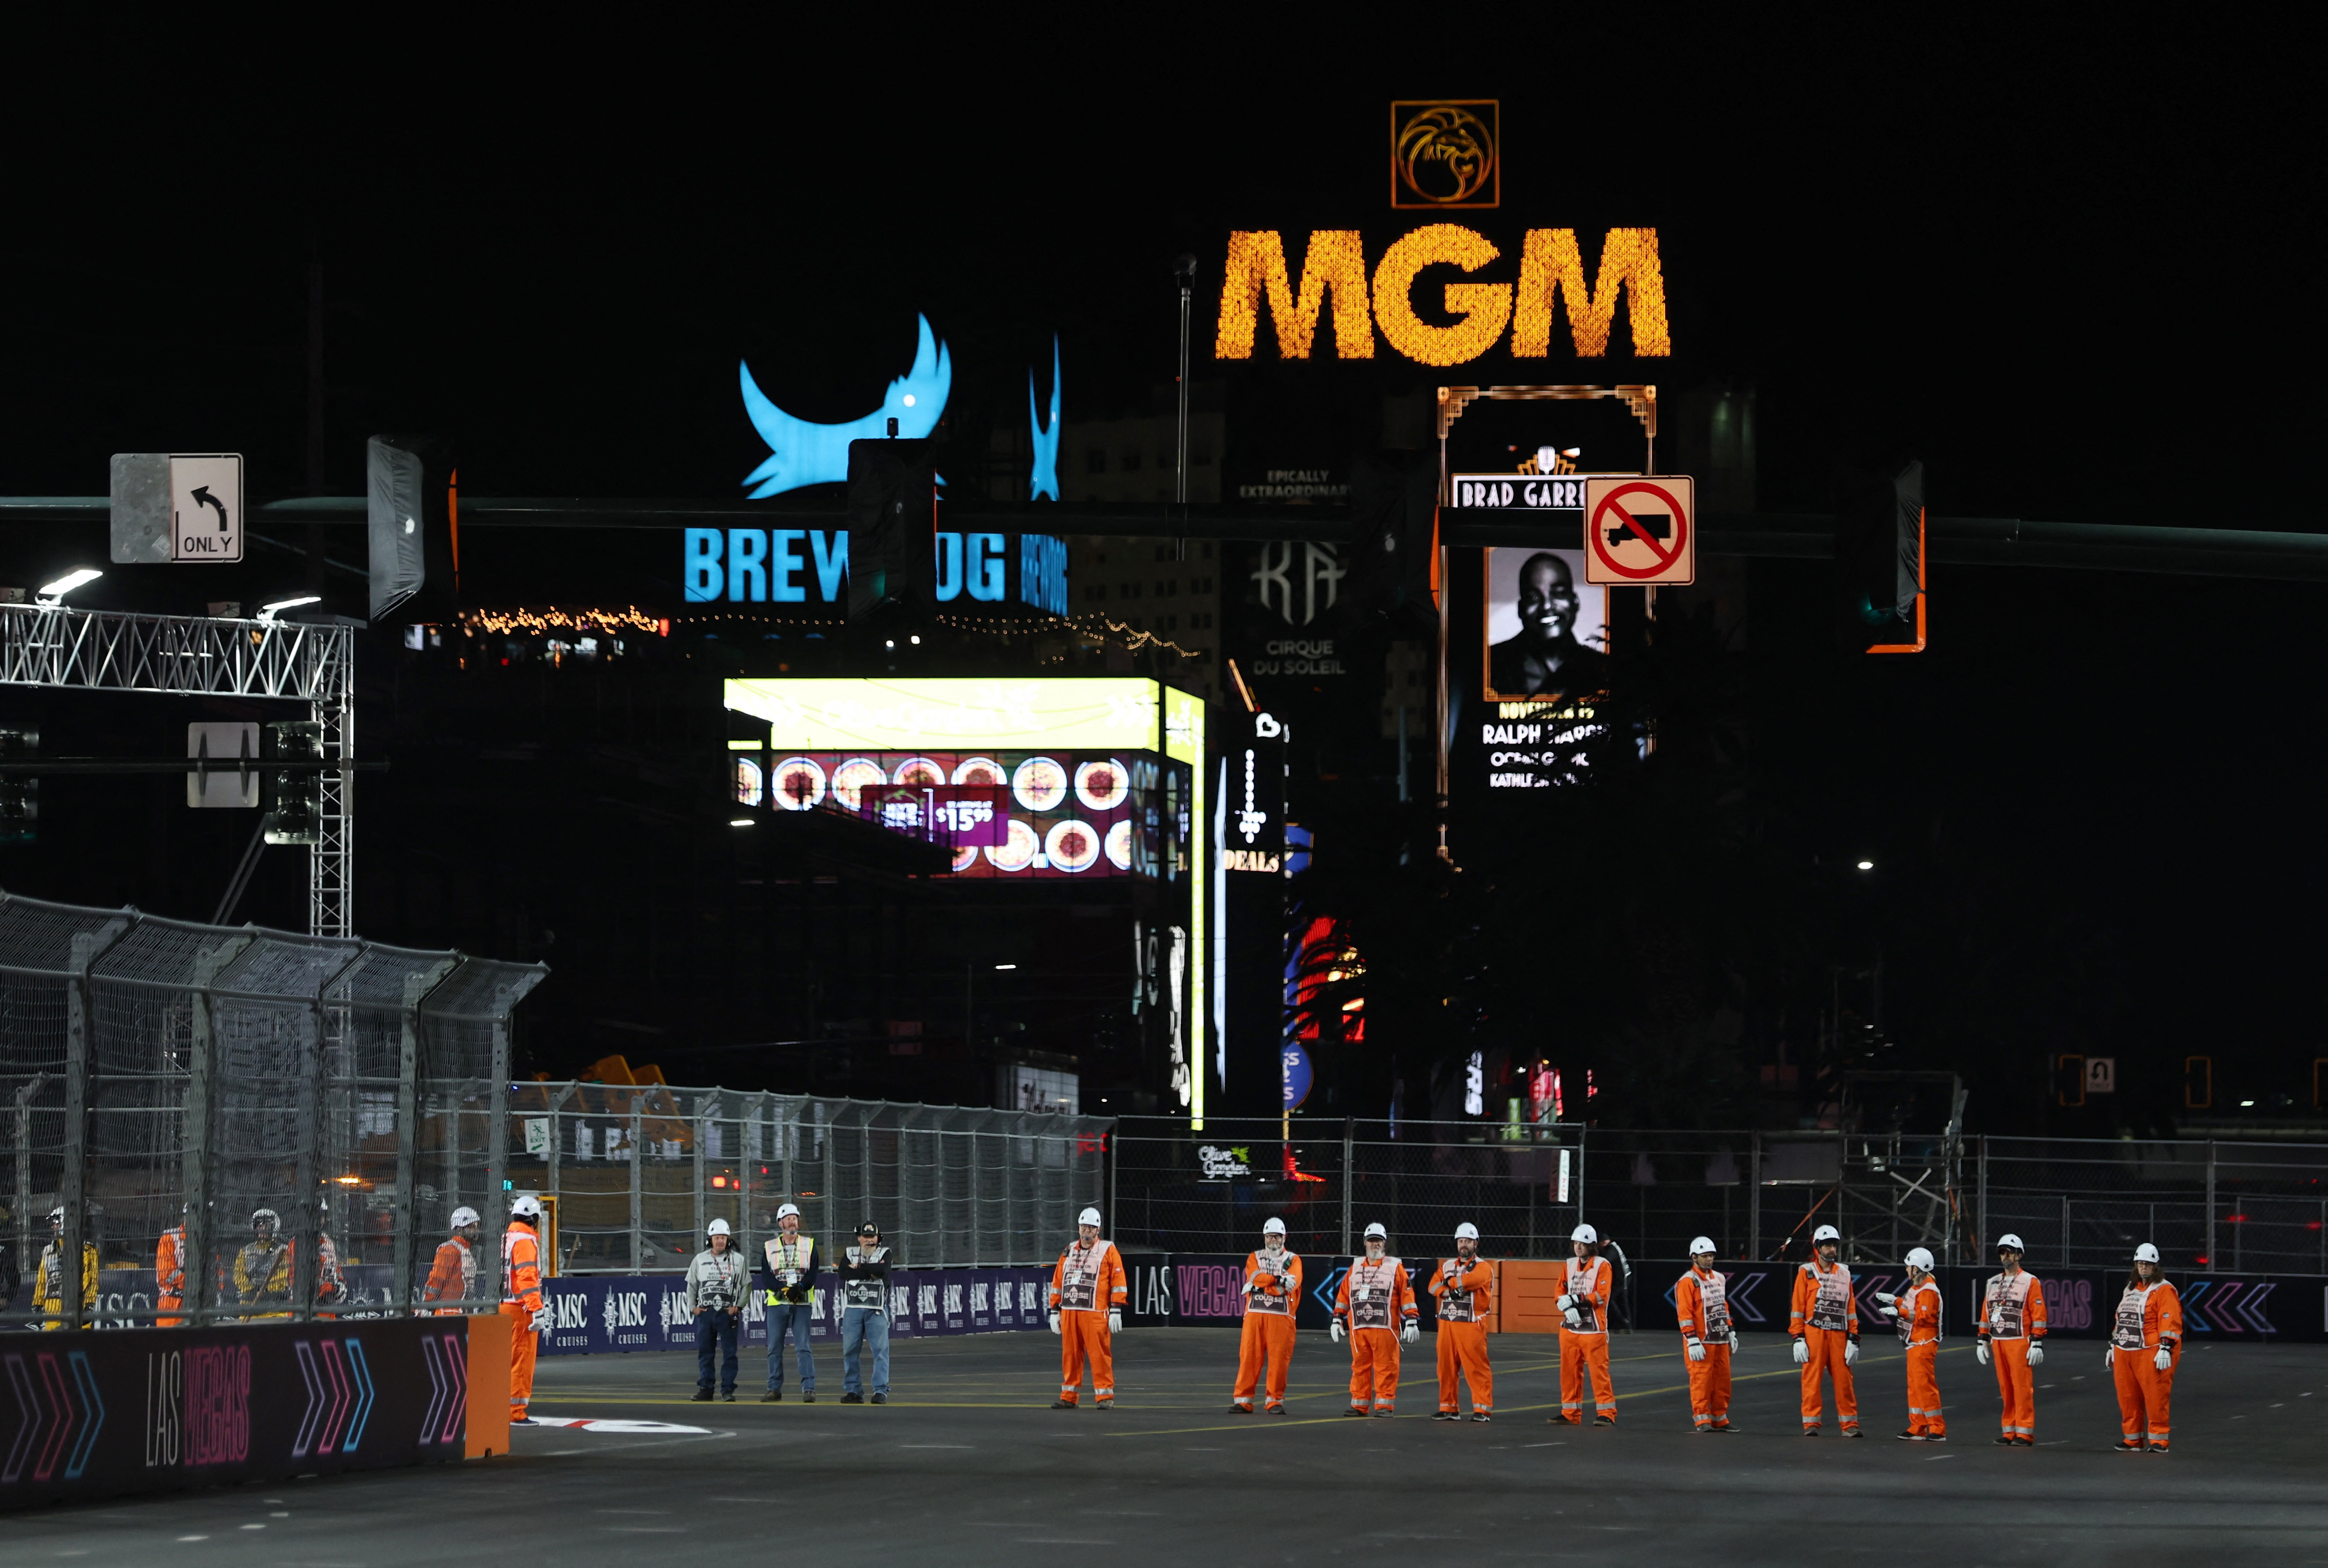 2023 Las Vegas Grand Prix – free practice